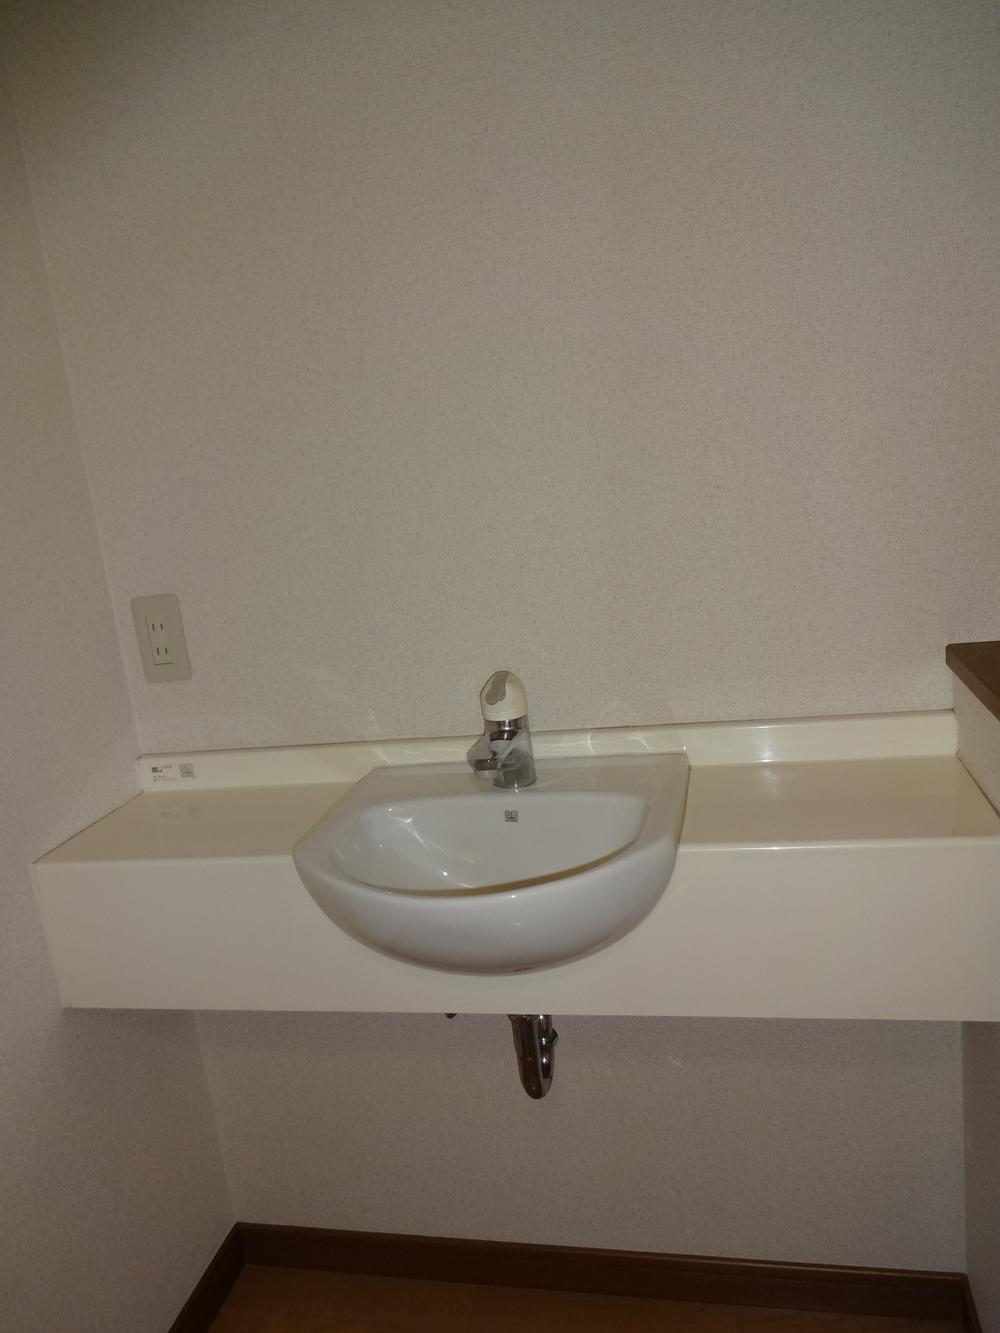 Wash basin, toilet. Second floor basin space (10 May 2013) Shooting